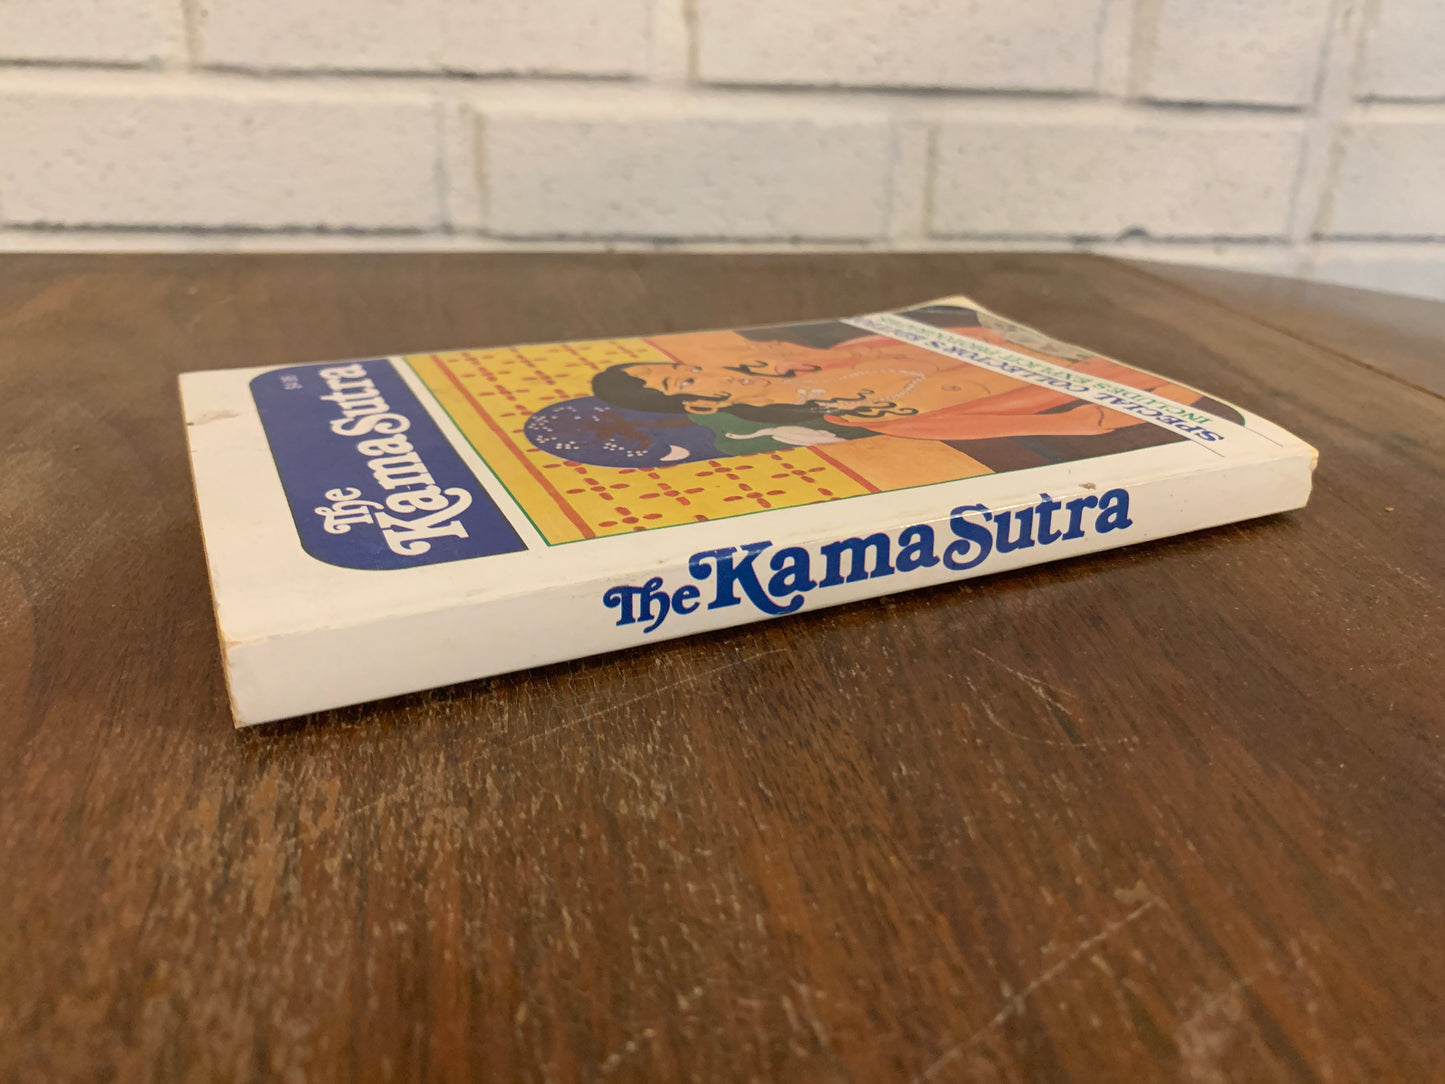 The Kama Sutra of Vatsyayana, 1981 Special Collector's Edition Book, Includes Explicit Photos